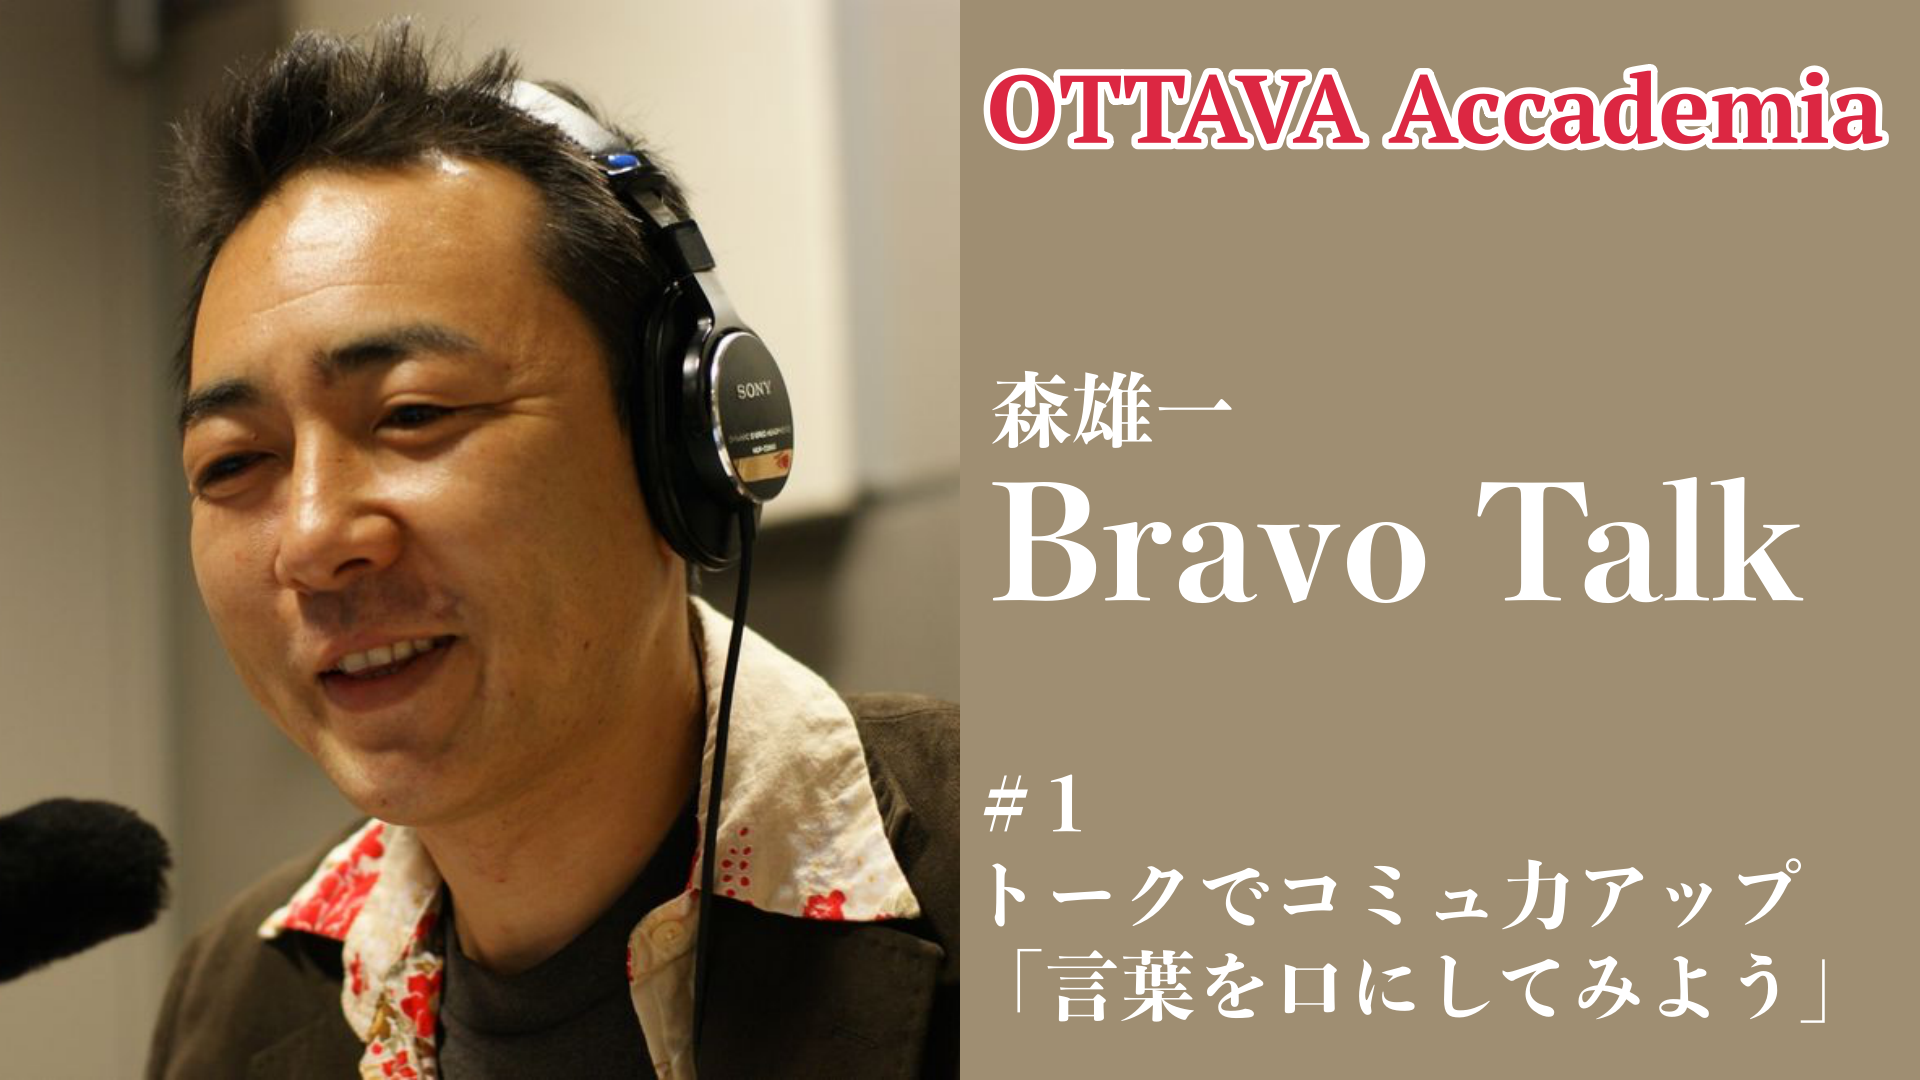 OTTAVA Accademiaー森雄一「Bravo Talk」#1-#3